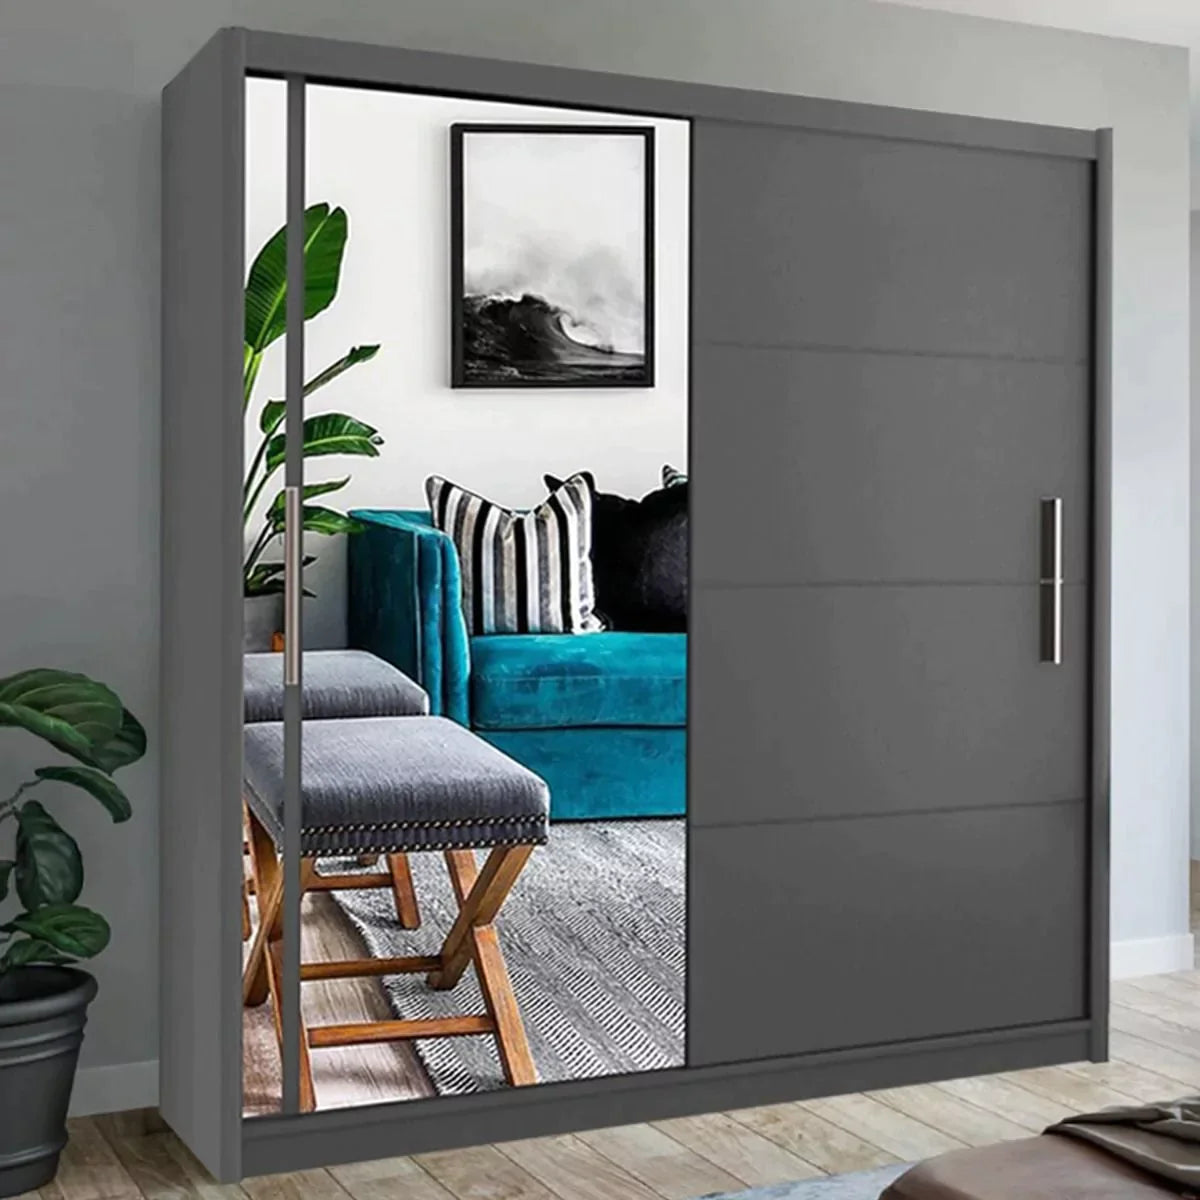 Keynes White Single Mirrored Sliding Door Wardrobe - 4 Sizes